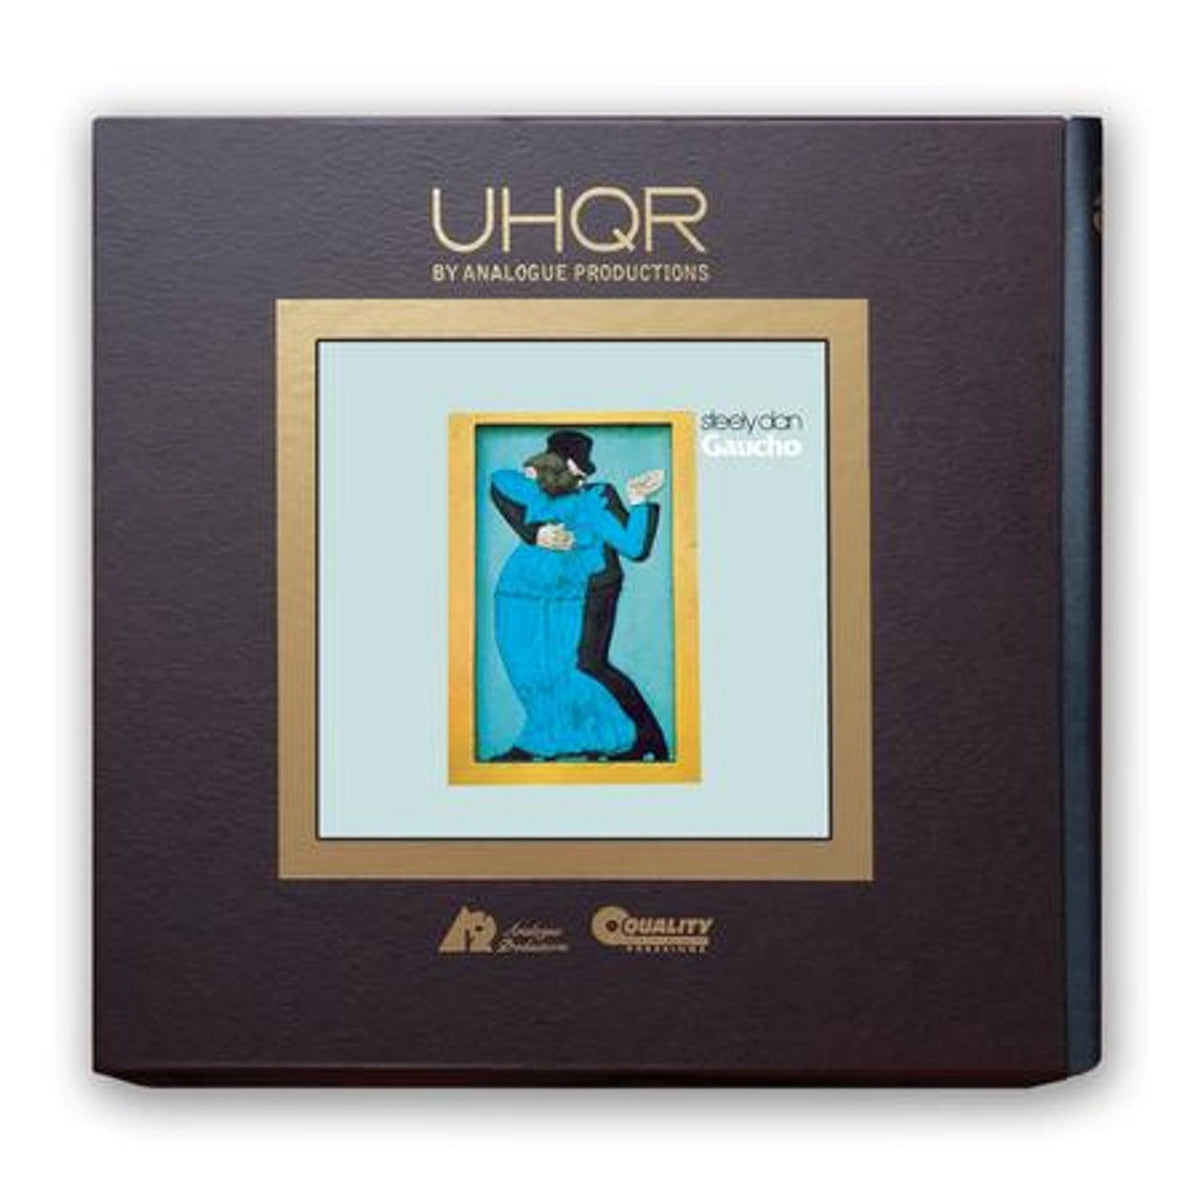 Steely Dan - Gaucho 2LP (Analogue Productions UHQR Box Set, 45rpm Clarity Vinyl)